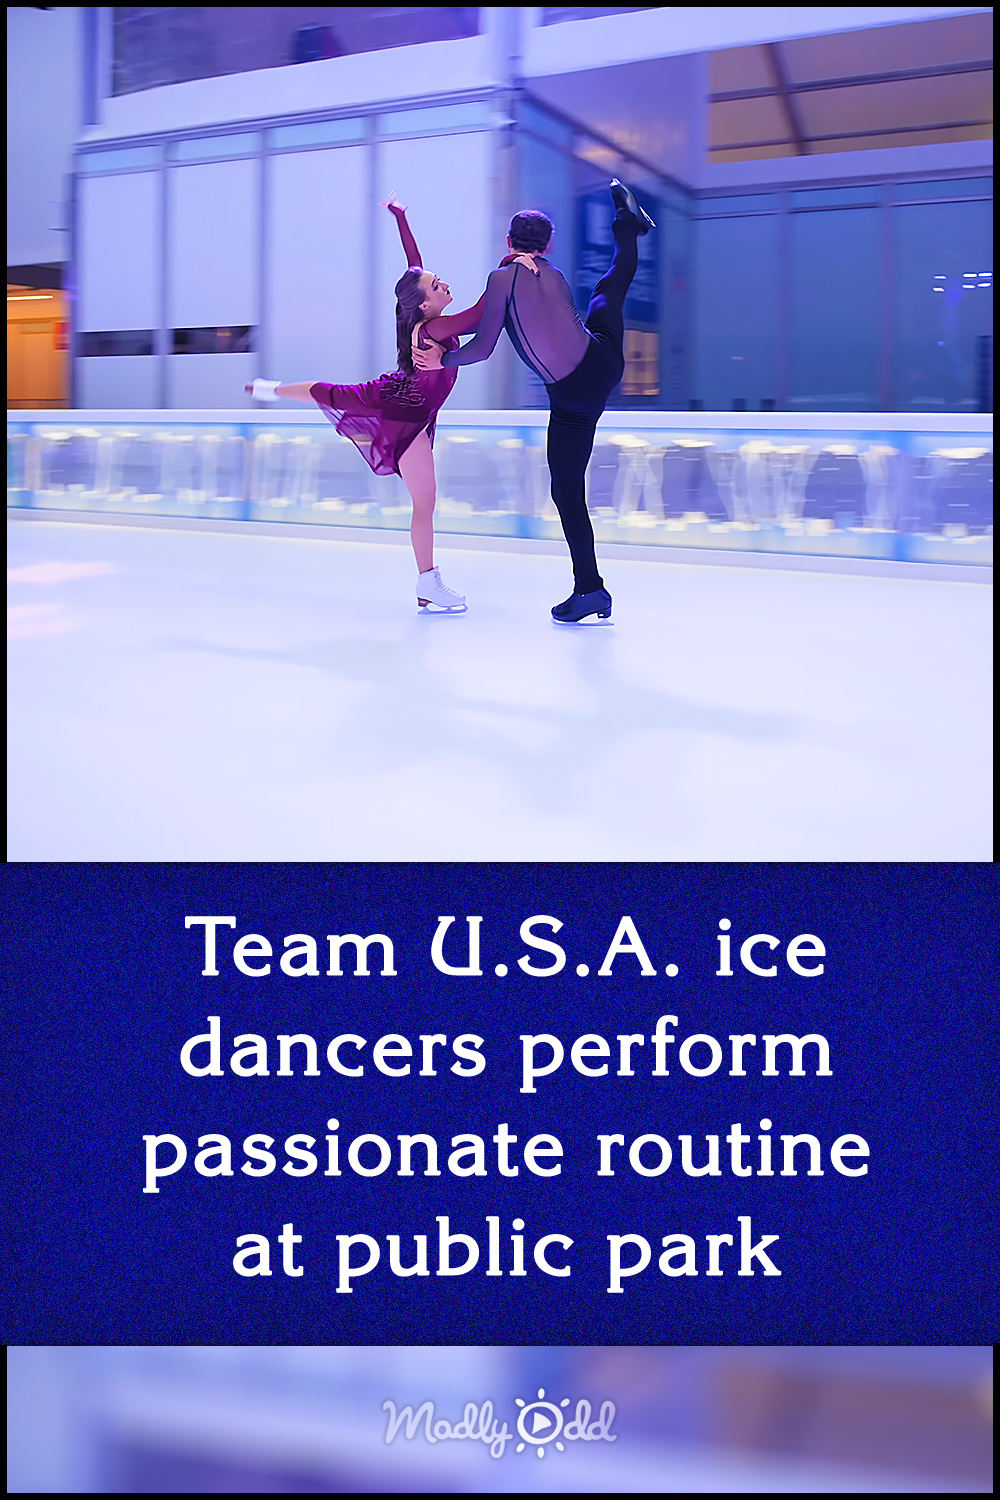 Team U.S.A. ice dancers perform passionate routine at public park